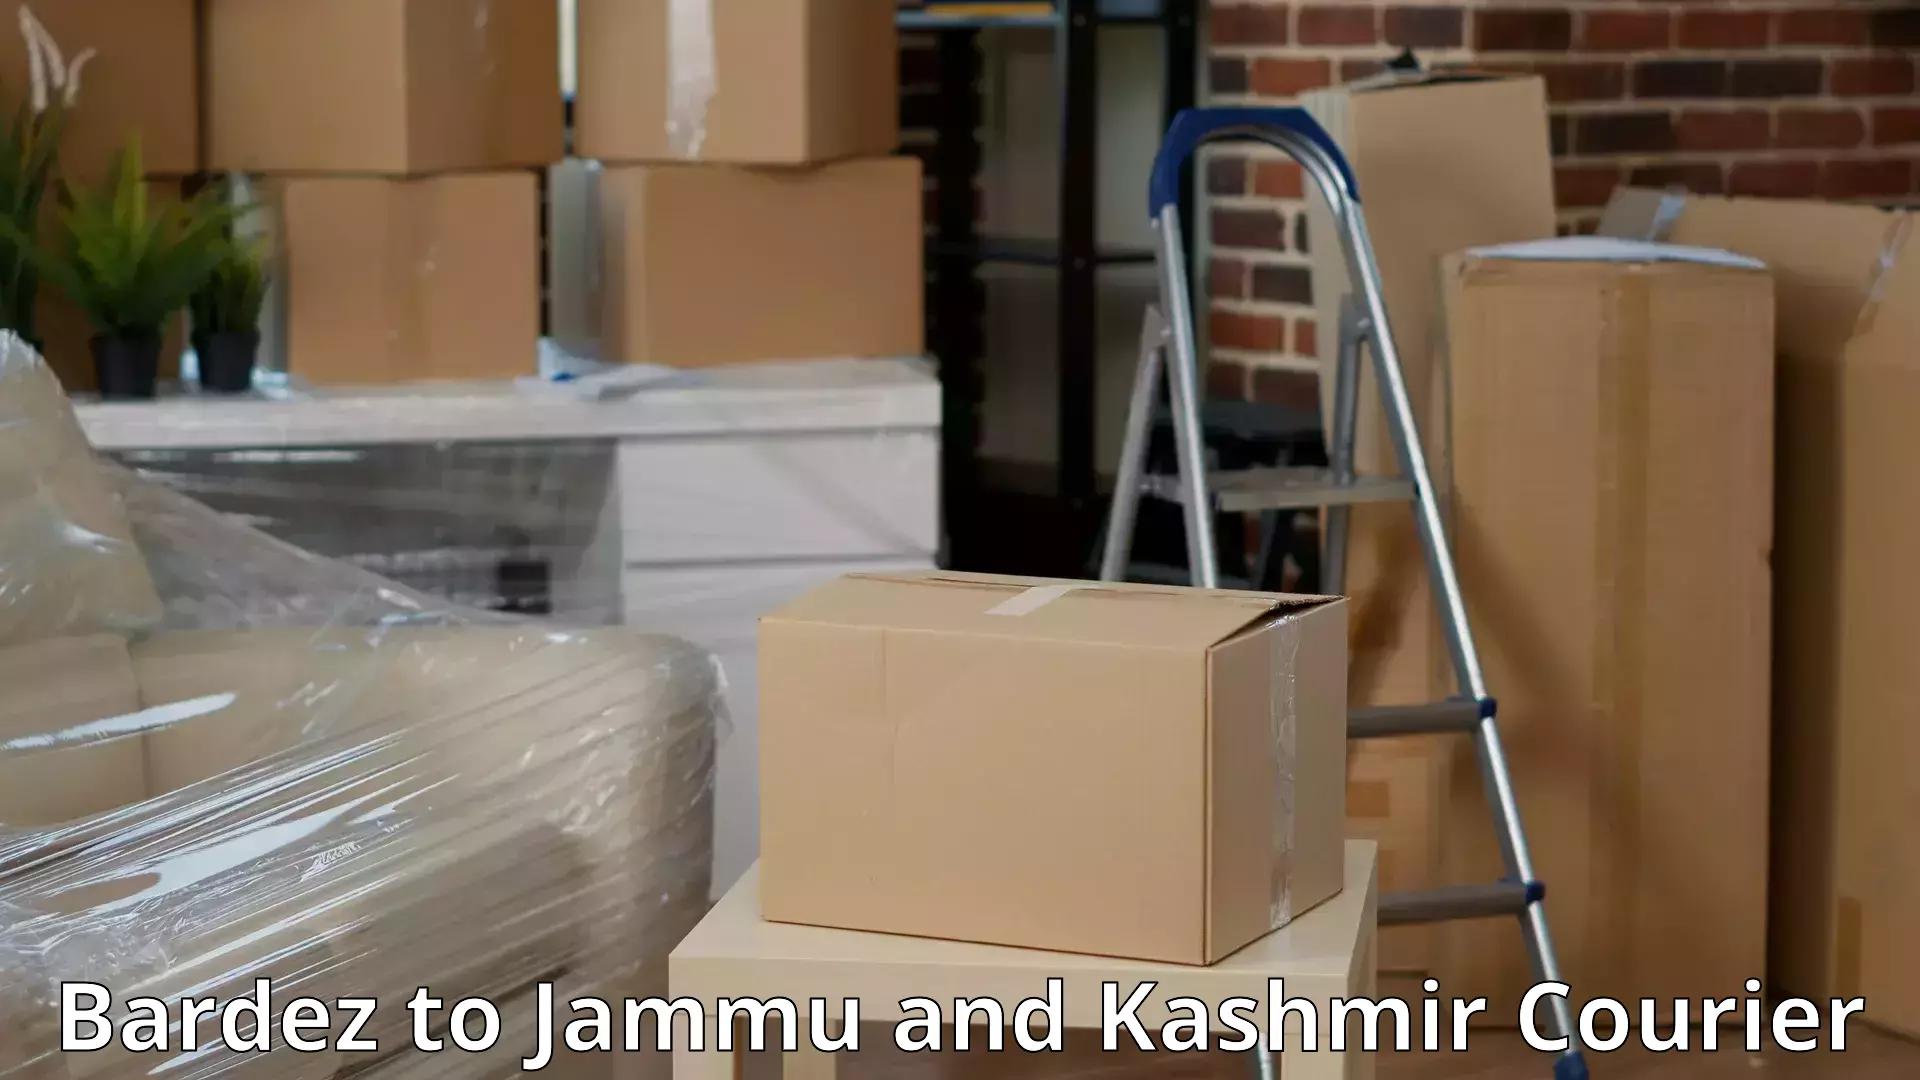 Professional moving strategies Bardez to Jammu and Kashmir